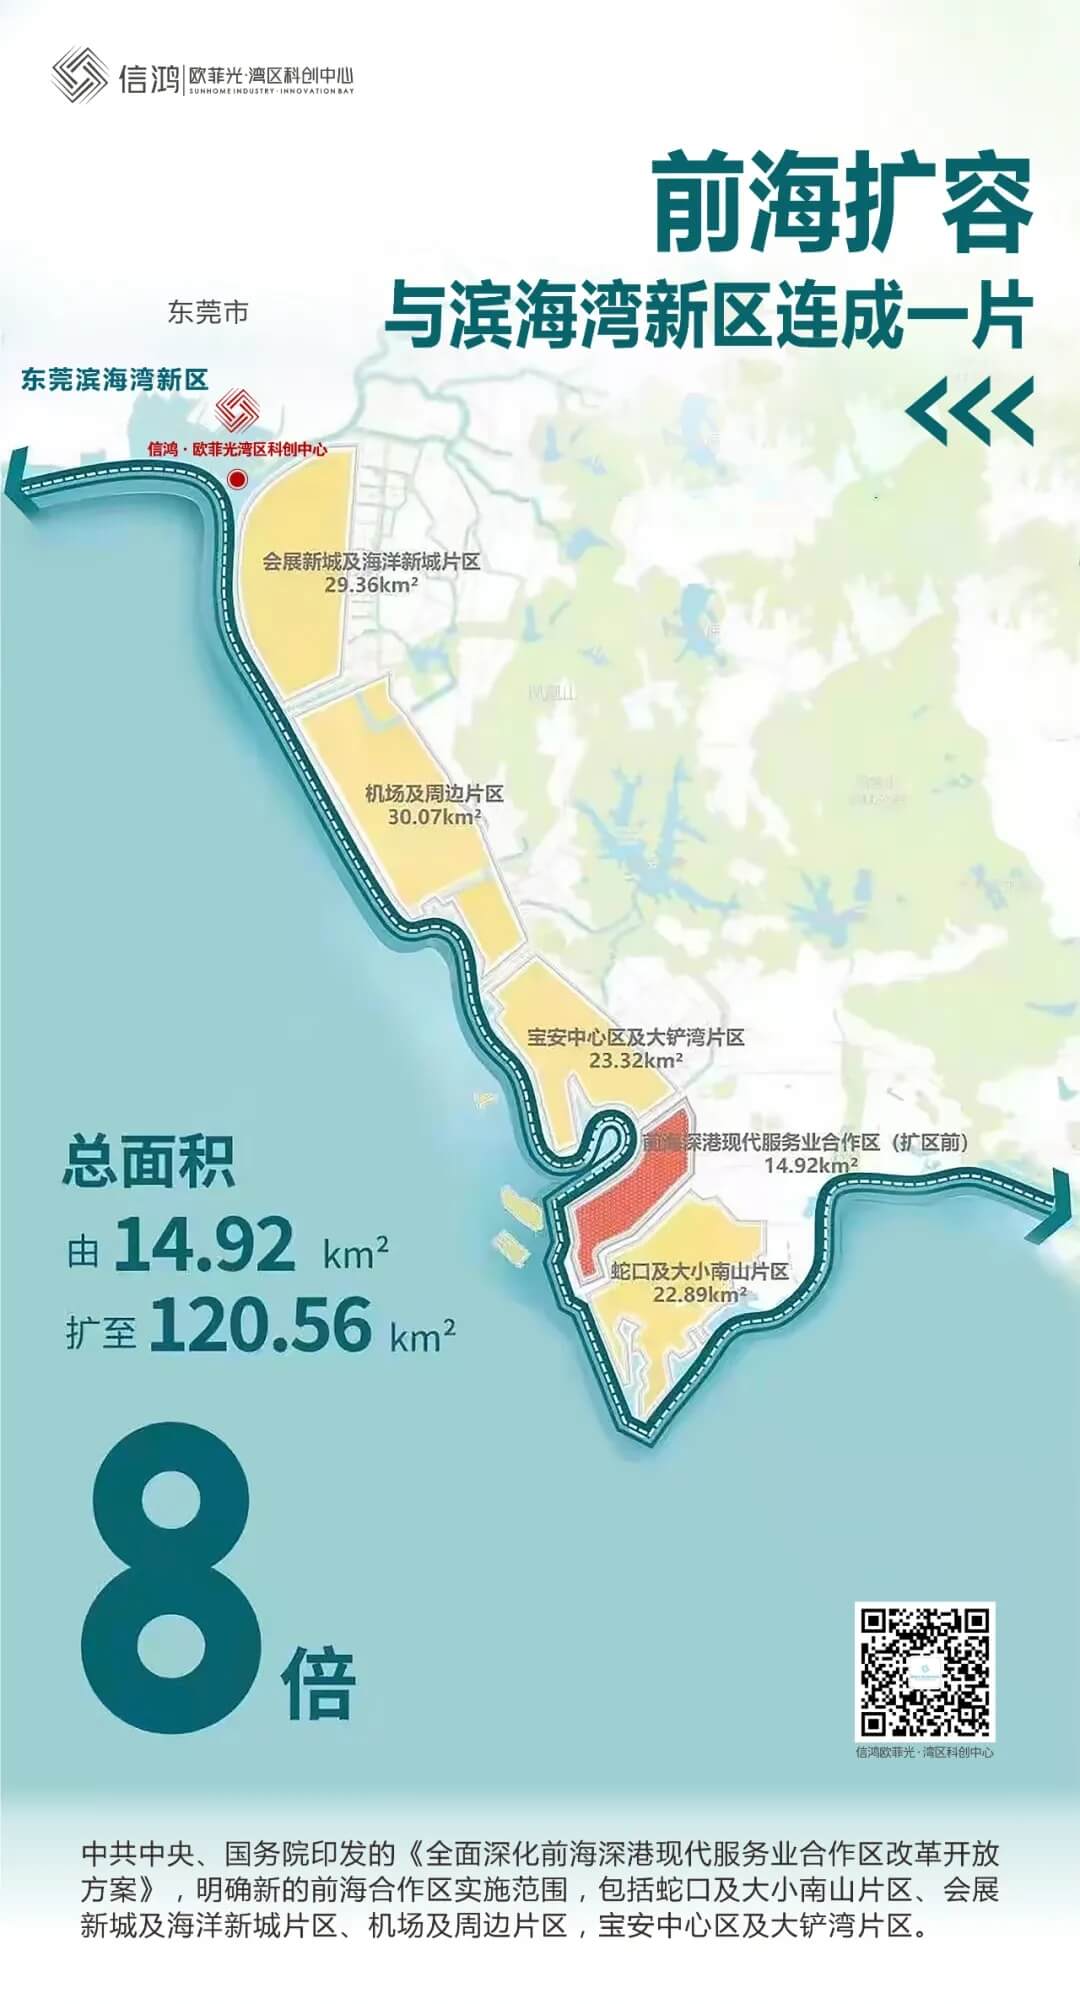 Qianhai expansion, Dongguan Bay New Area to benefit!  